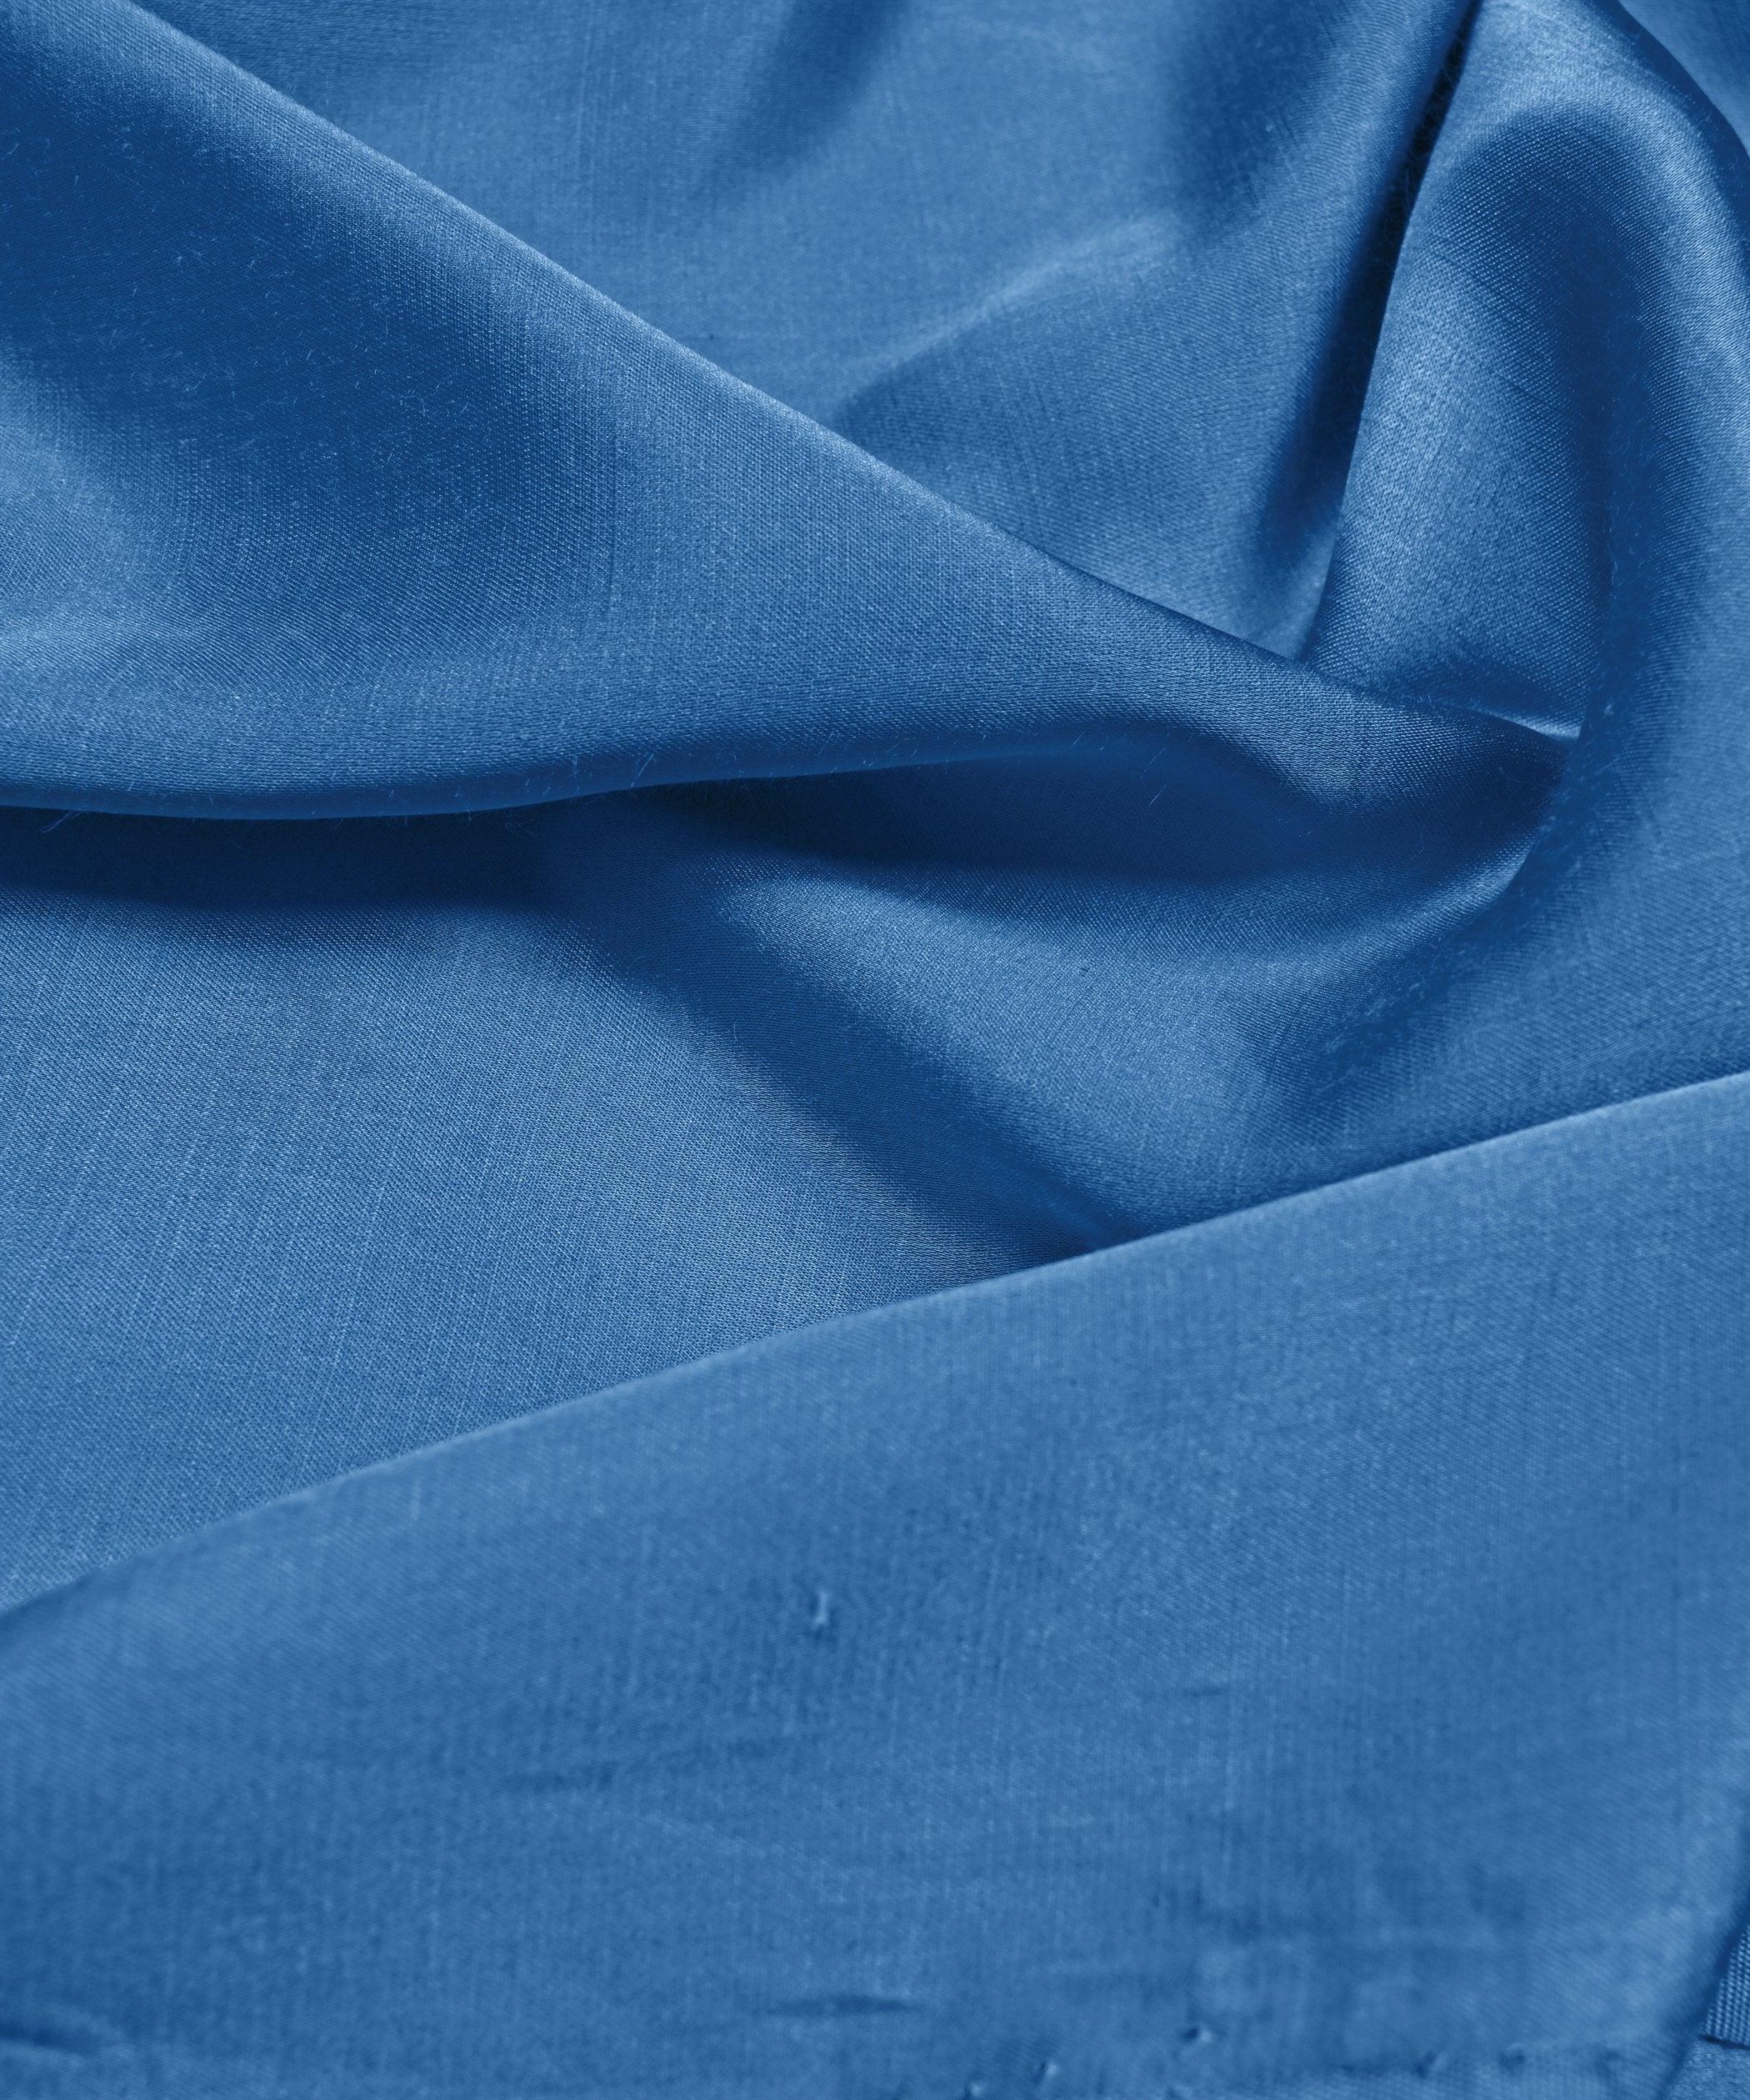 Blueberry Plain Dyed Modal Satin Fabric